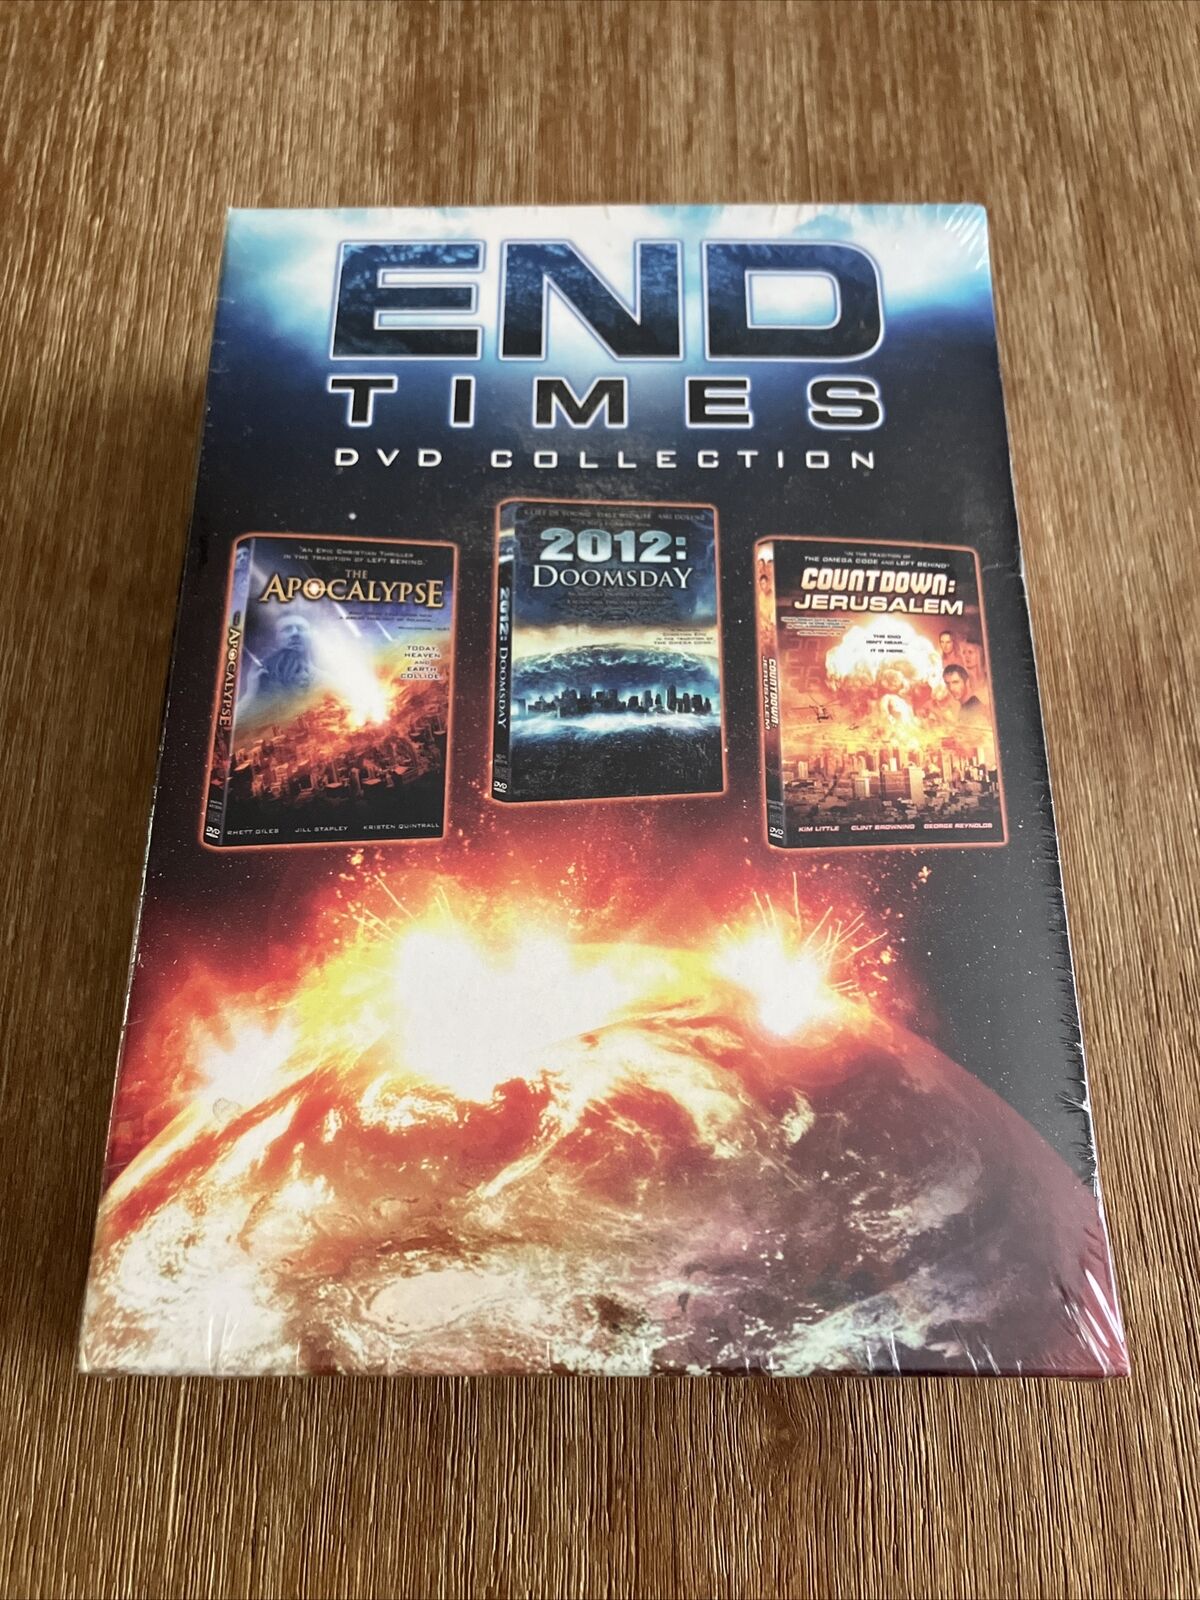 Lot 3 DVDs End Times Collection Apocalypse 2012 Doomsday Countdown Jerusalem